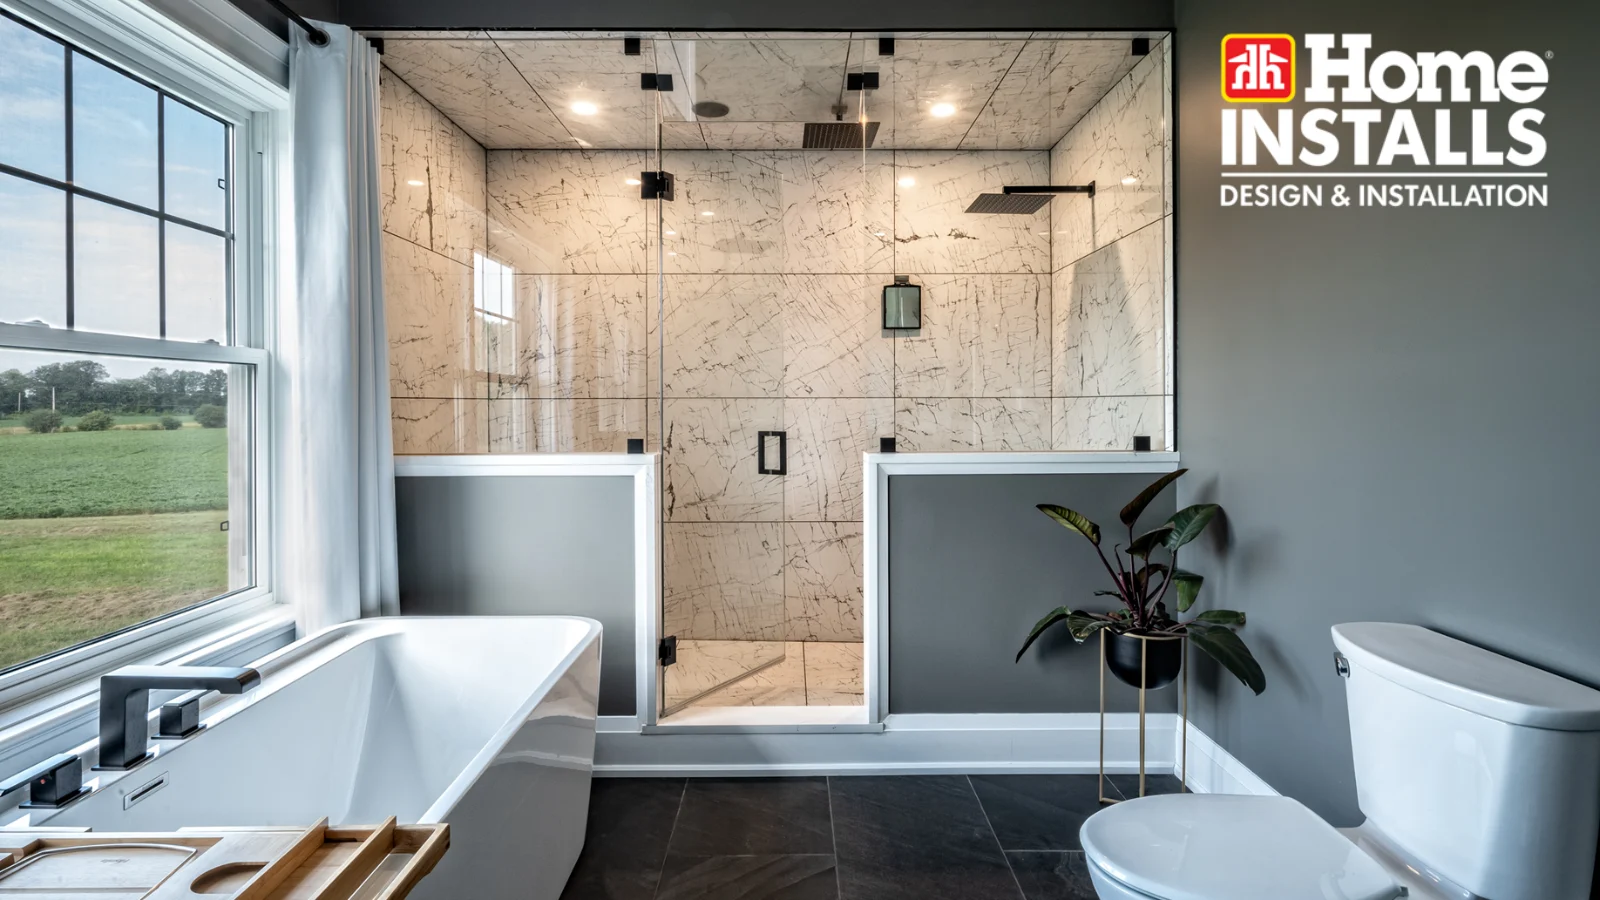 Home Installs - Bathroom Installs - Design Trends Article Header Image